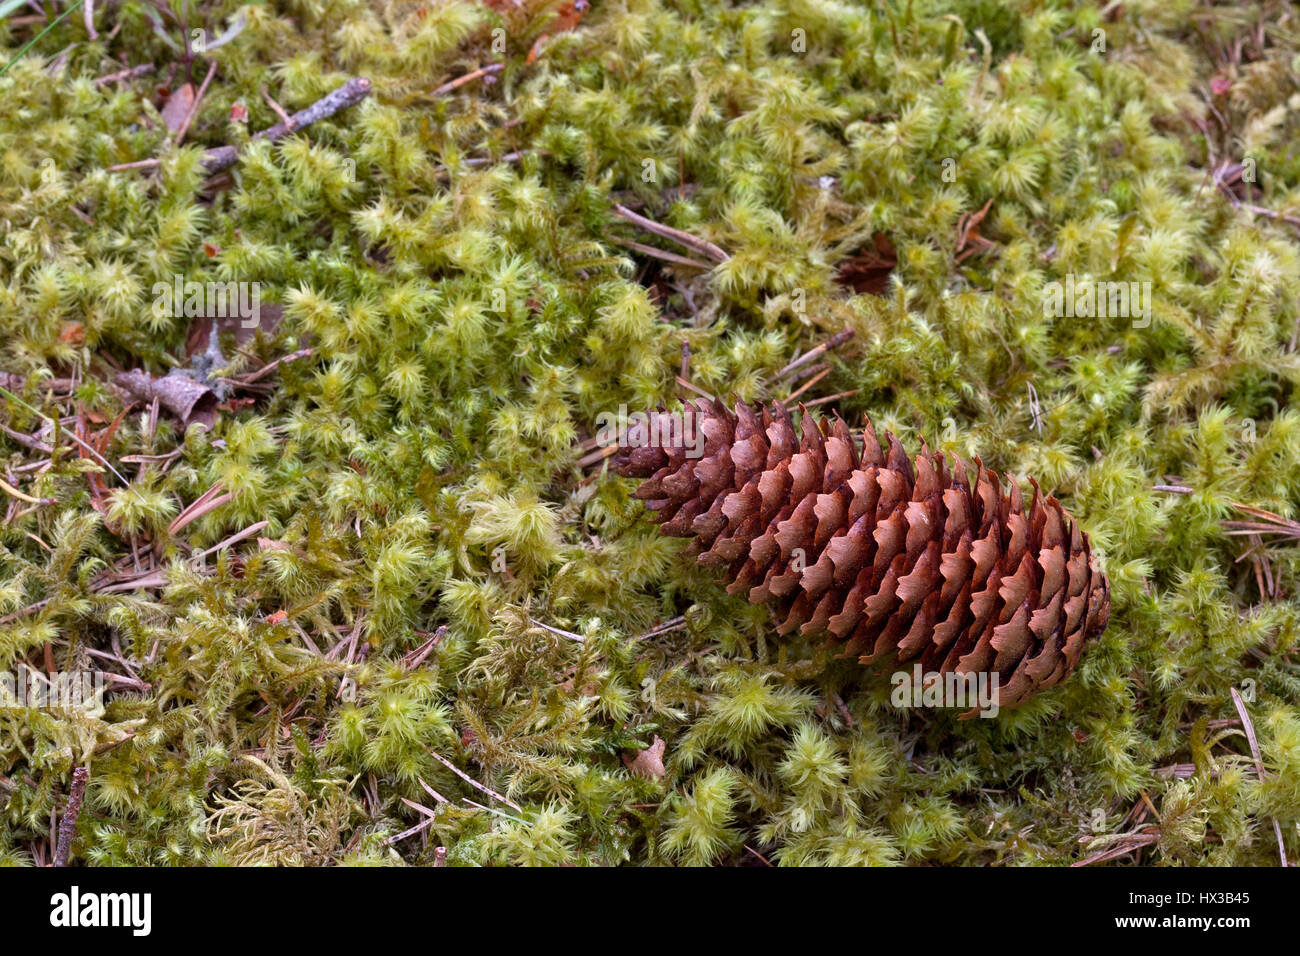 Norway Spruce, Picea abies, single pine cone lying on moss, Linn of Dee, Scotland, UK Stock Photo